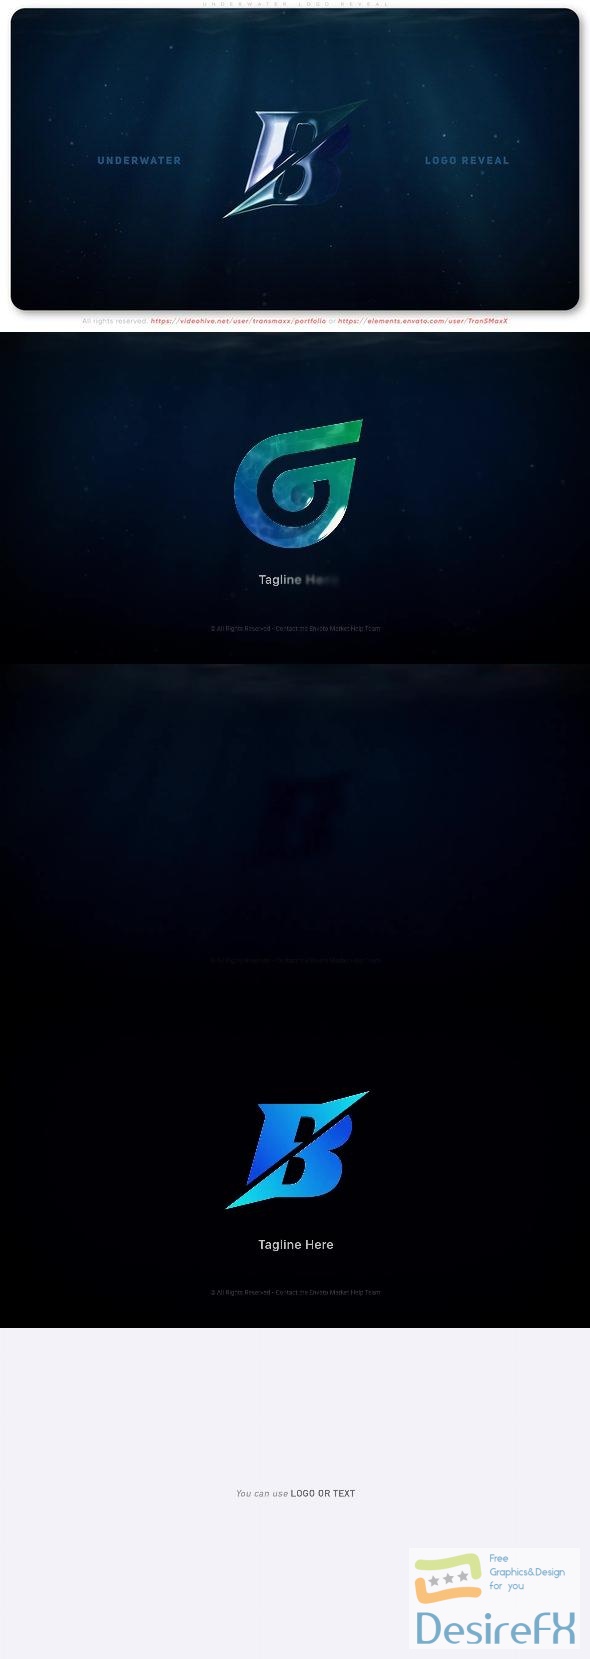 VideoHive Underwater Logo Reveal 44779194